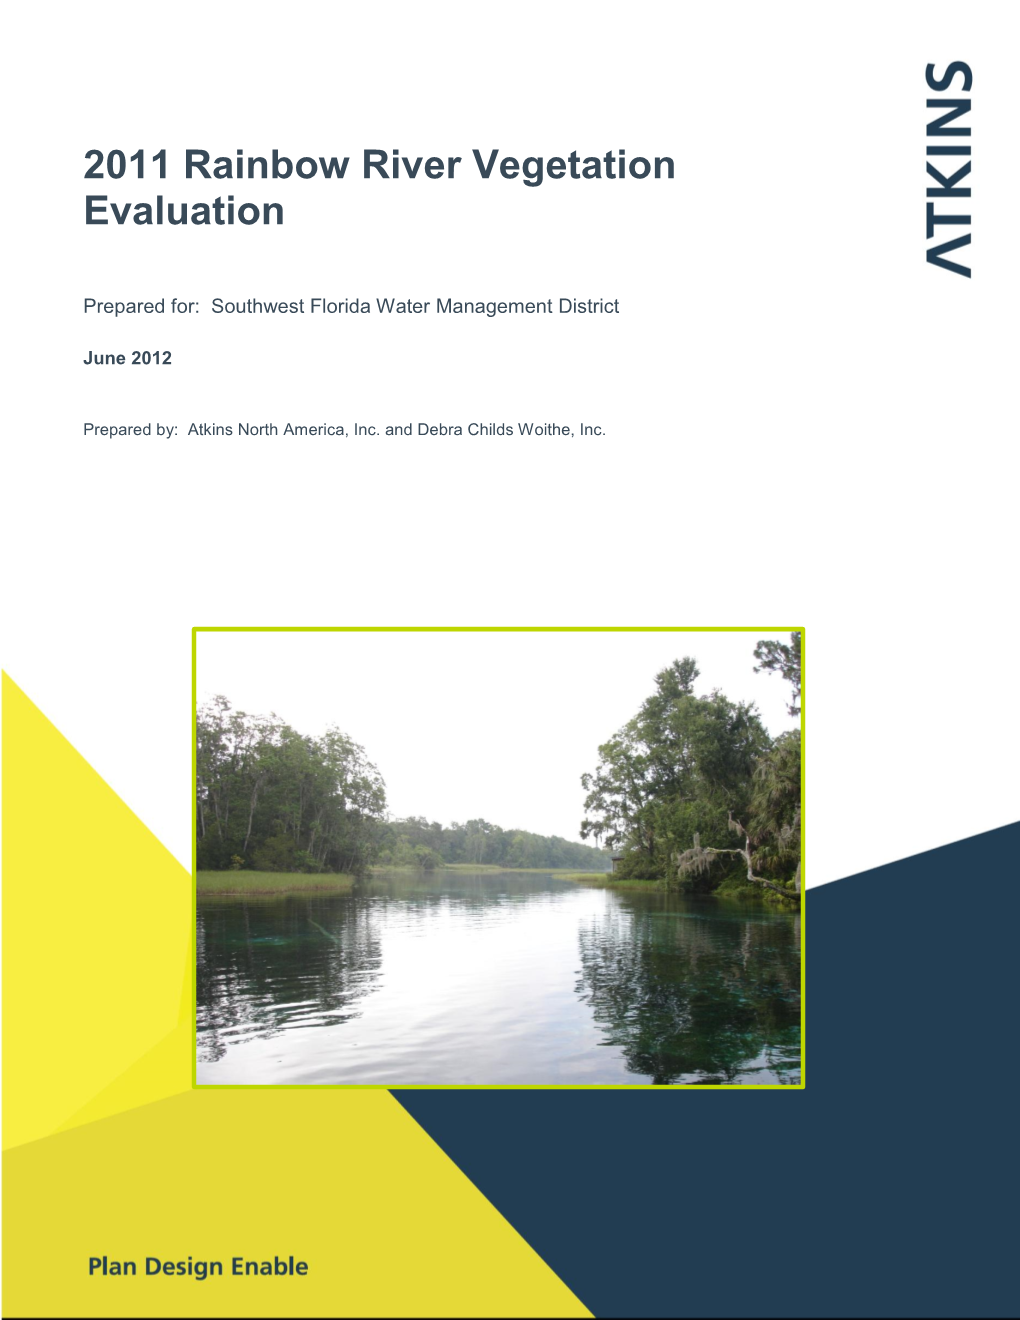 2011 Rainbow River Vegetation Evaluation